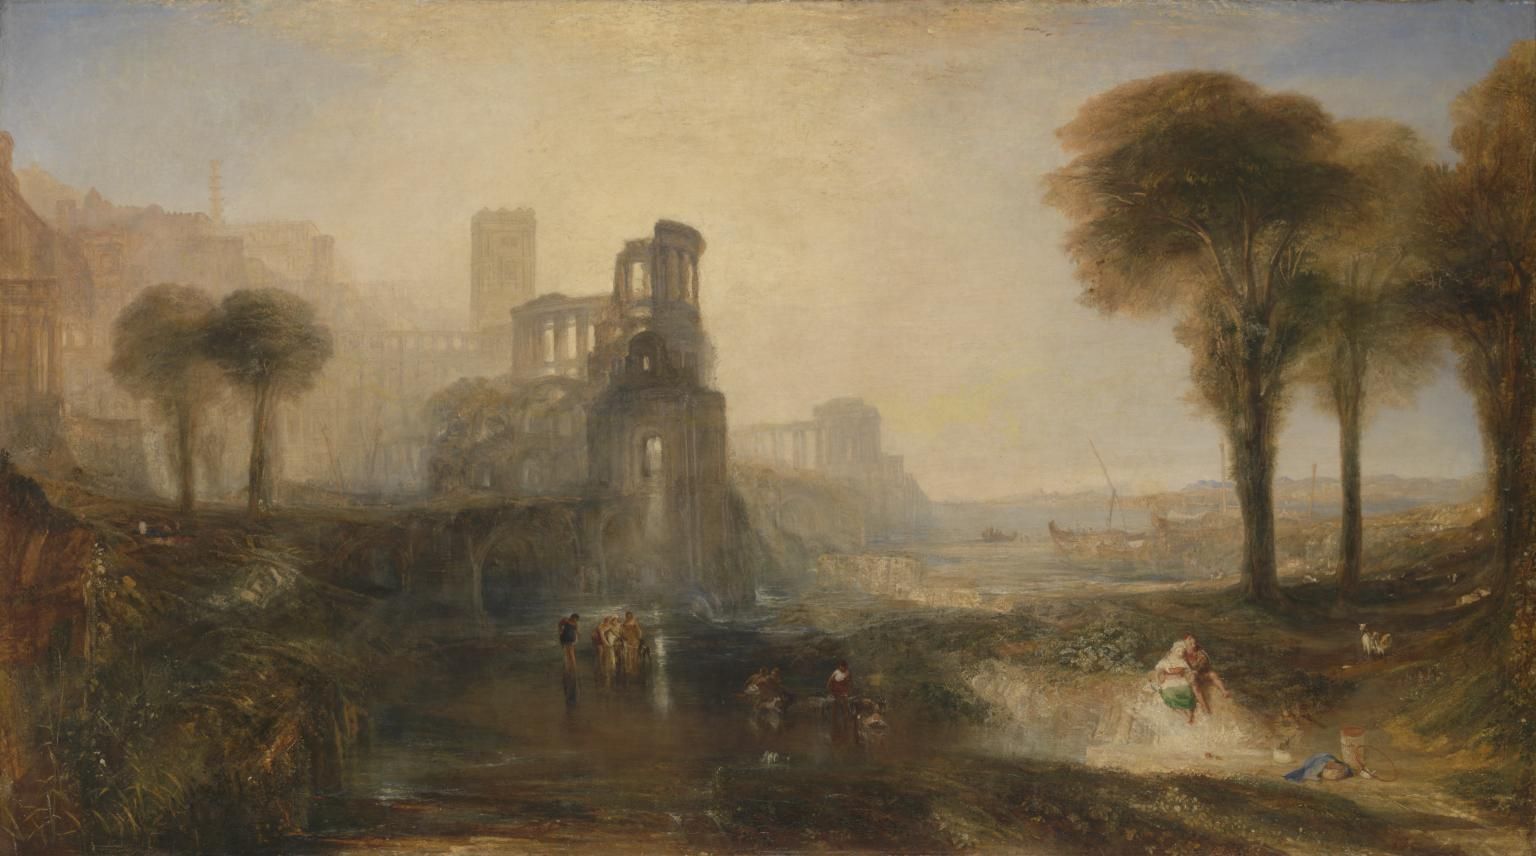 Caligula's Palace and Bridge', Joseph Mallord William Turner, exhibited 1831